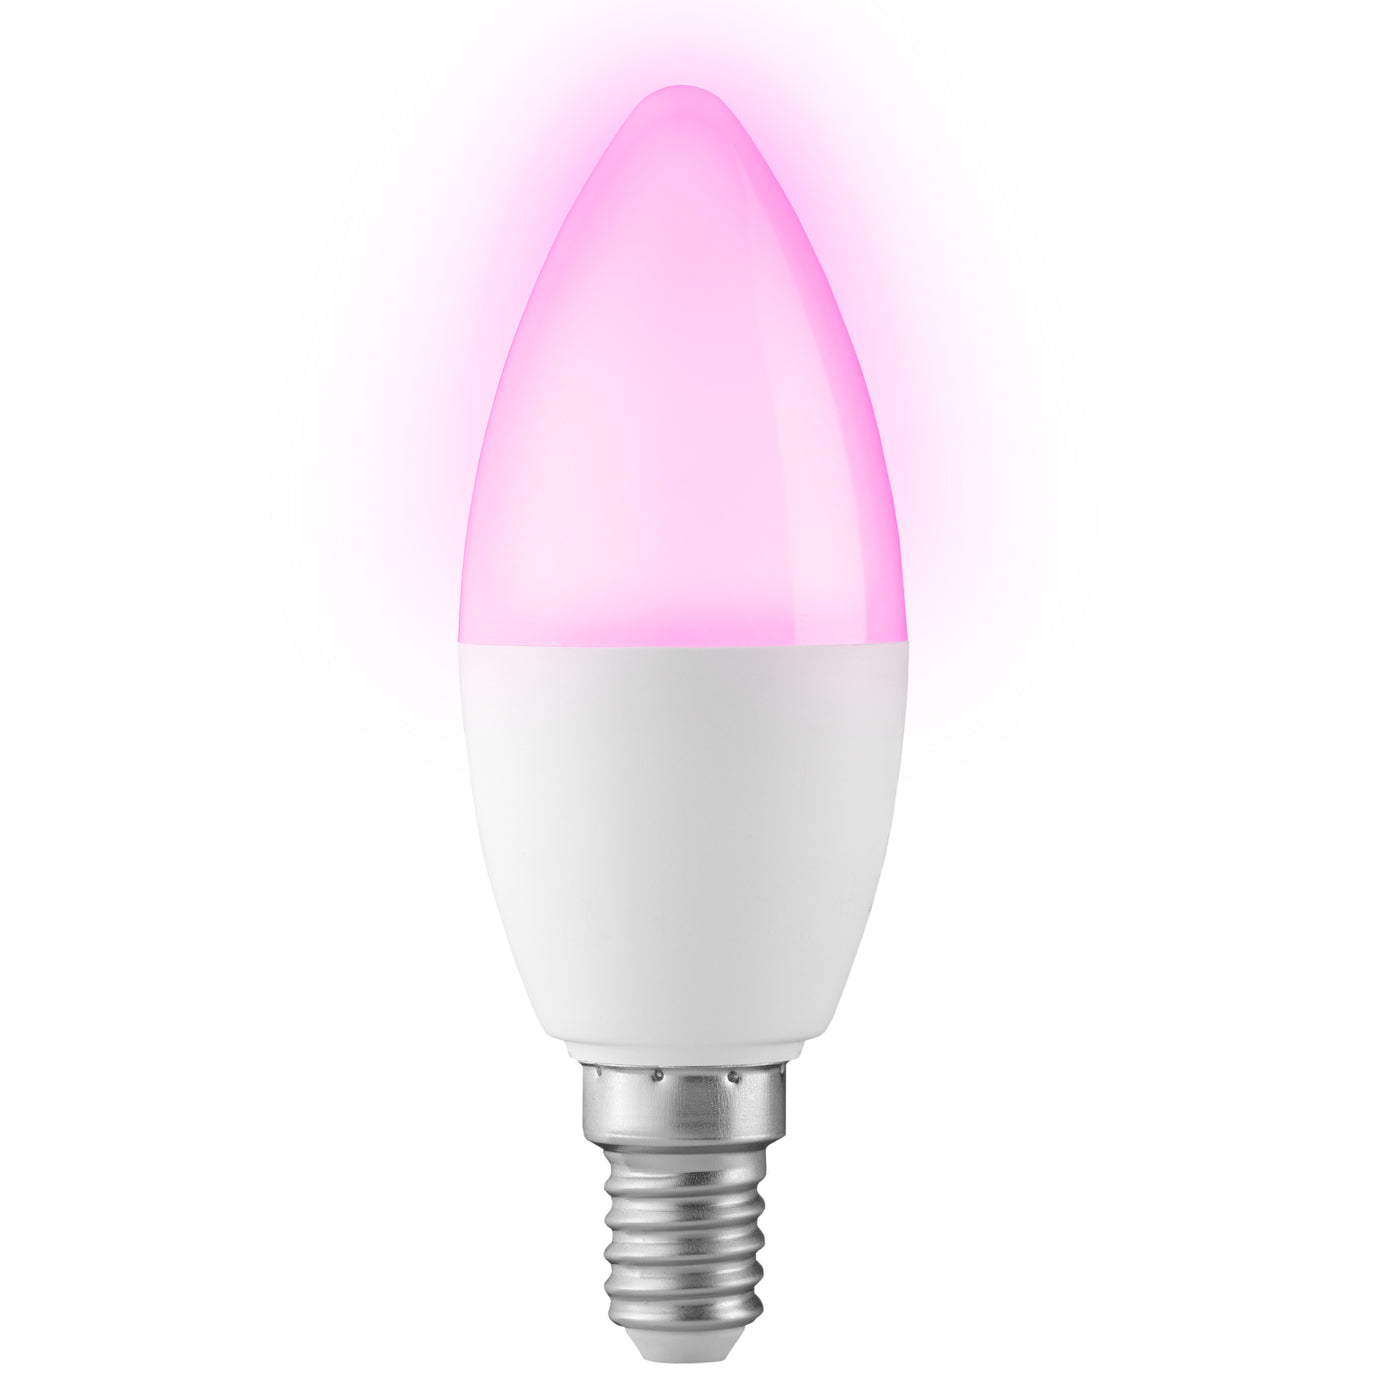 Alecto SMARTLIGHT30 - Lampe de couleur LED intelligente avec Wi-Fi